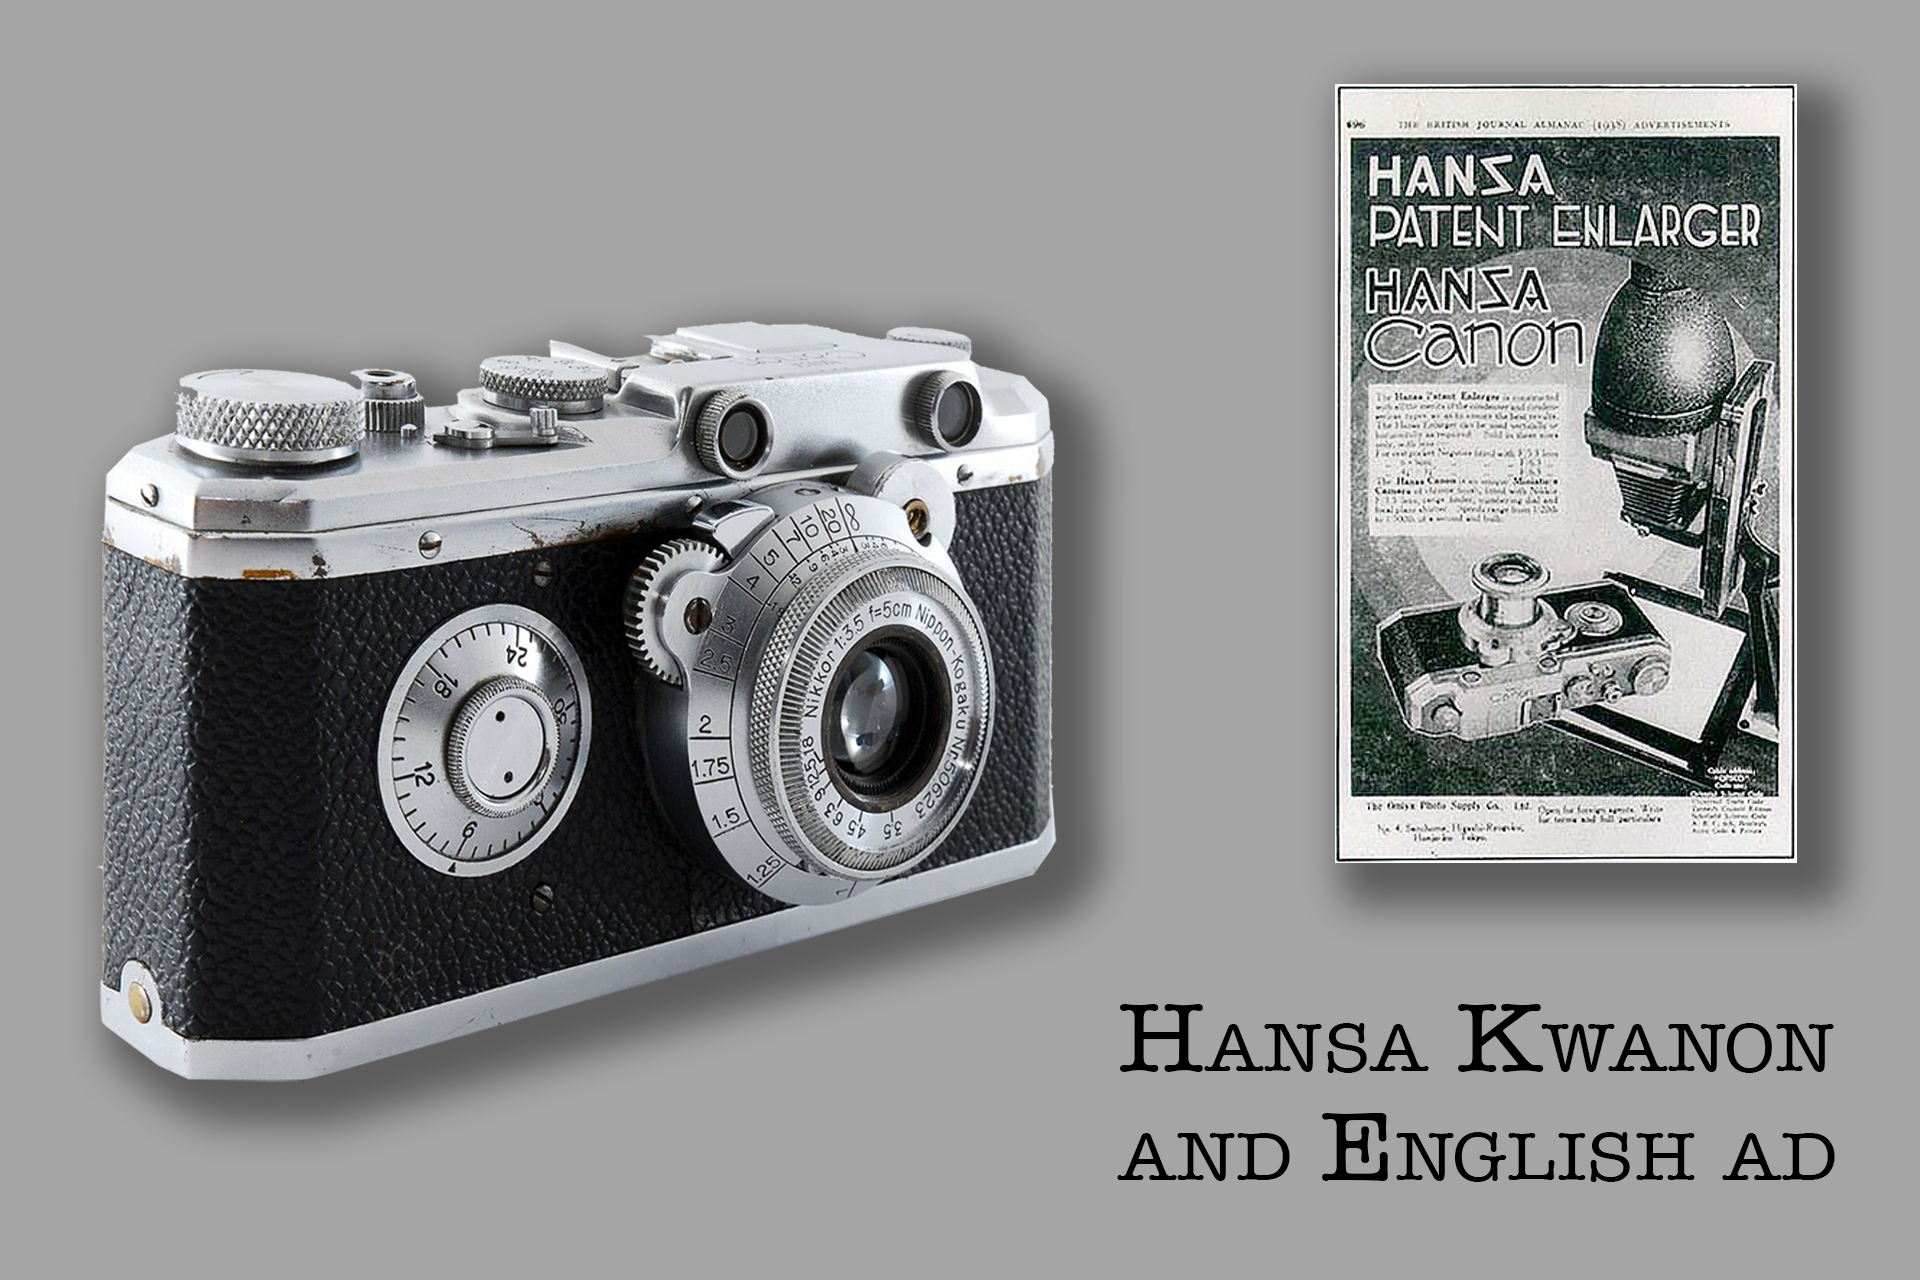 1920x1280px-Hansa-Kwanon + ad-vWA24